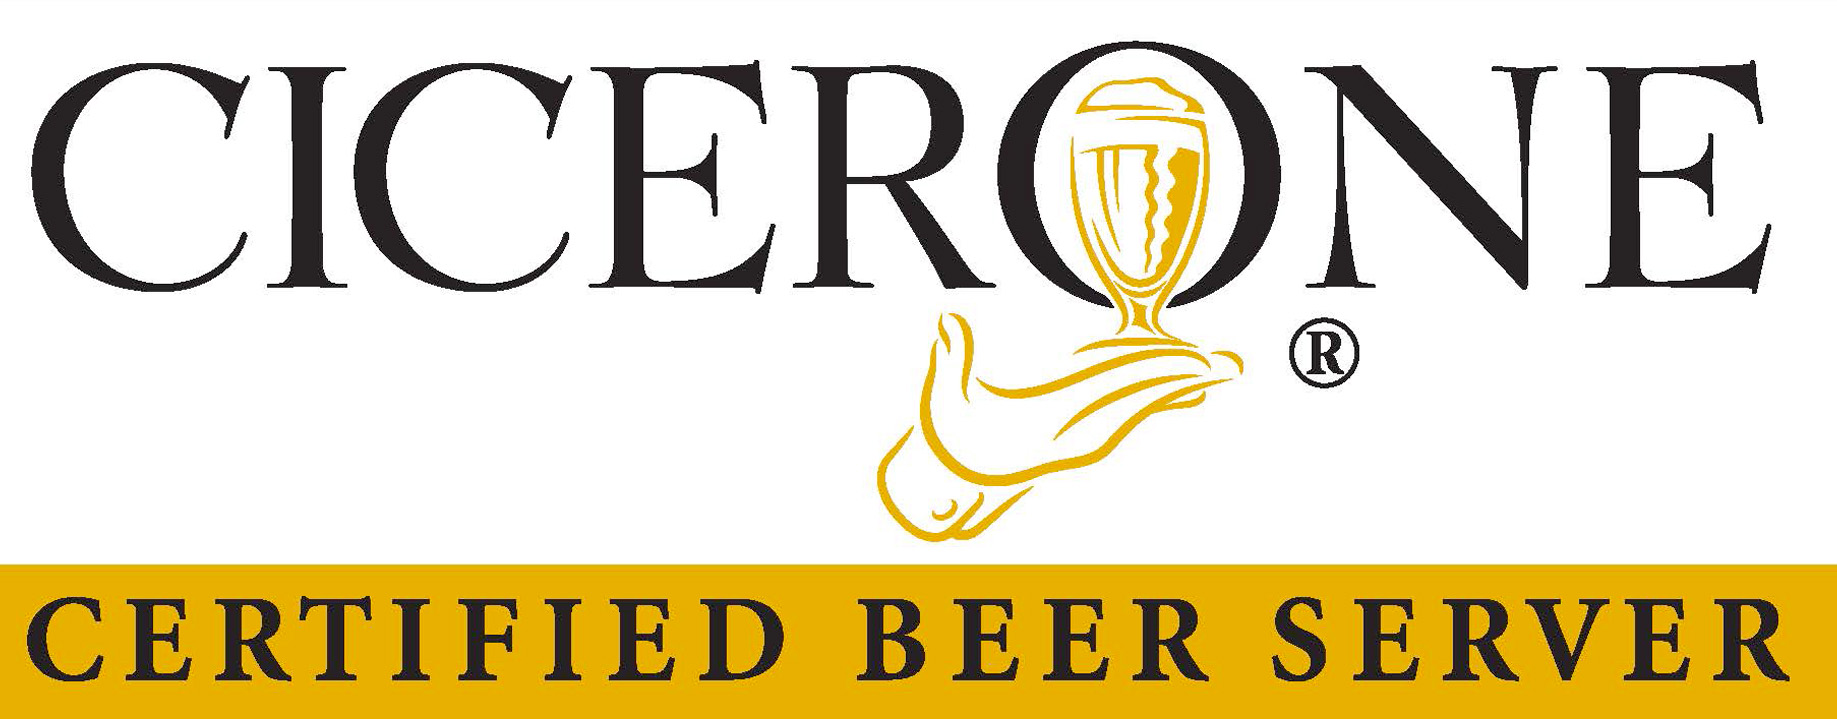 Certified Beer Server - Cicerone Accredited